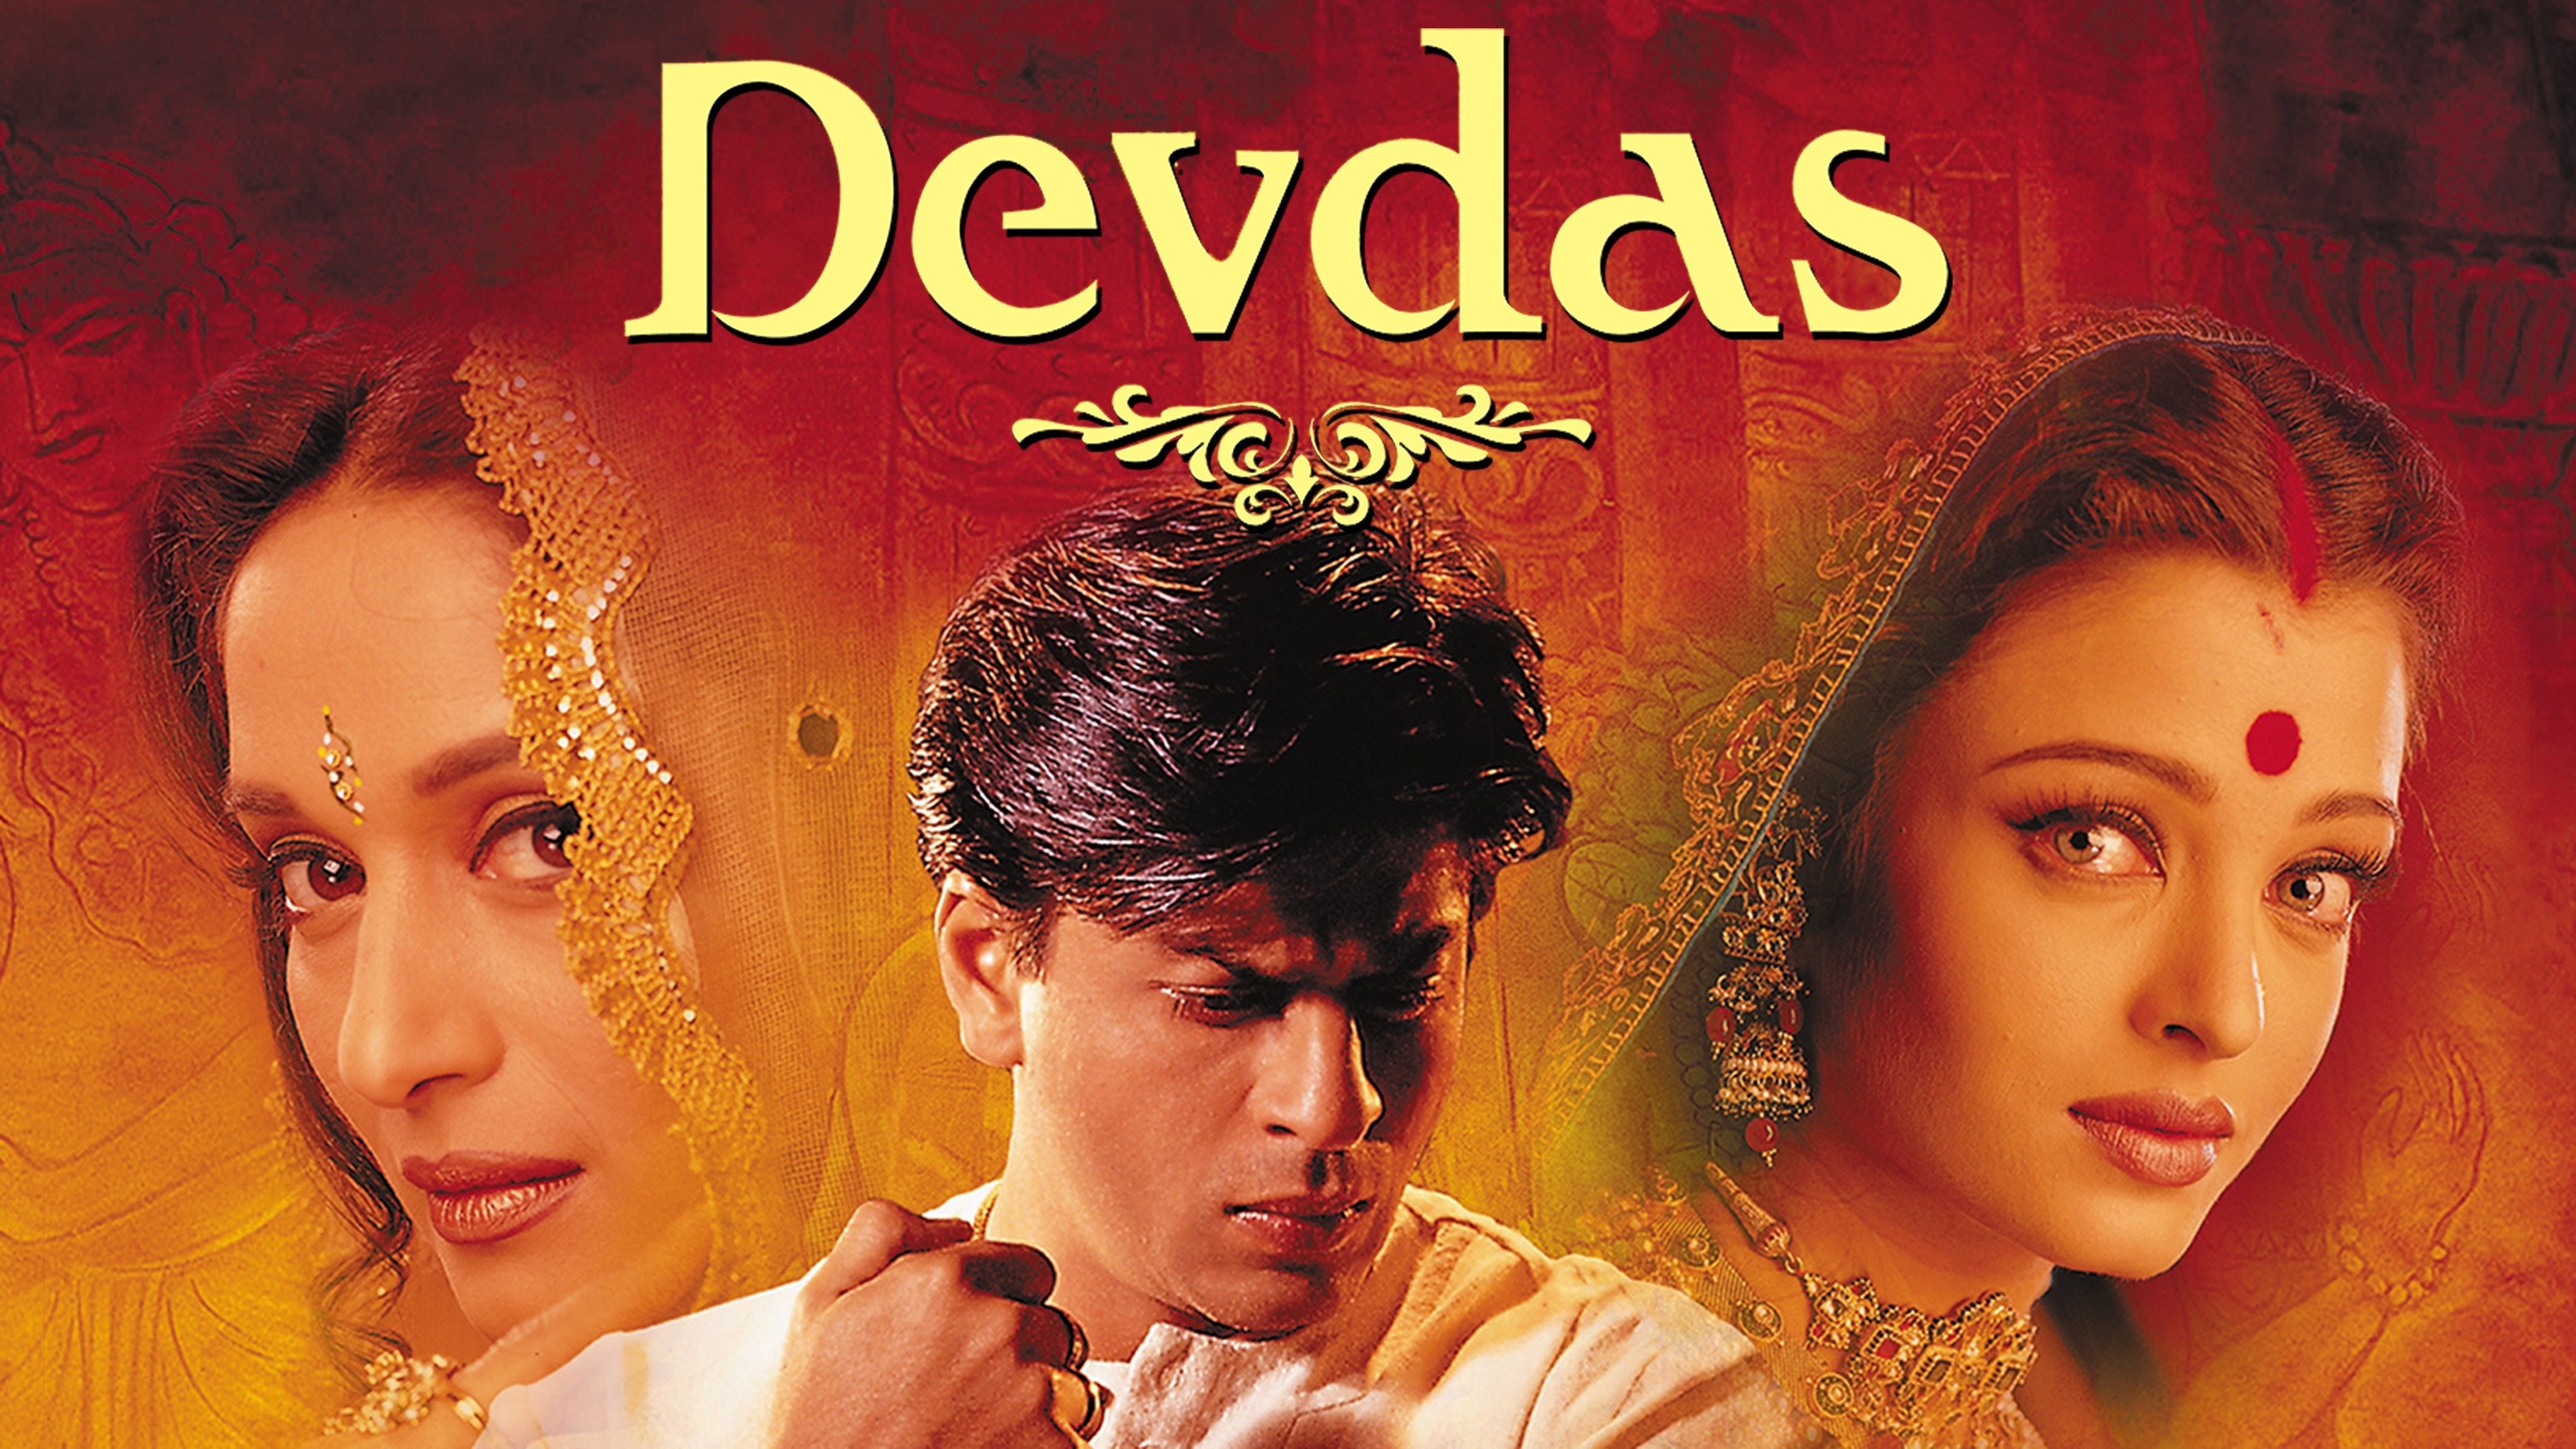 Devdas (2002) Hindi Movie: Watch Full HD Movie Online On JioCinema